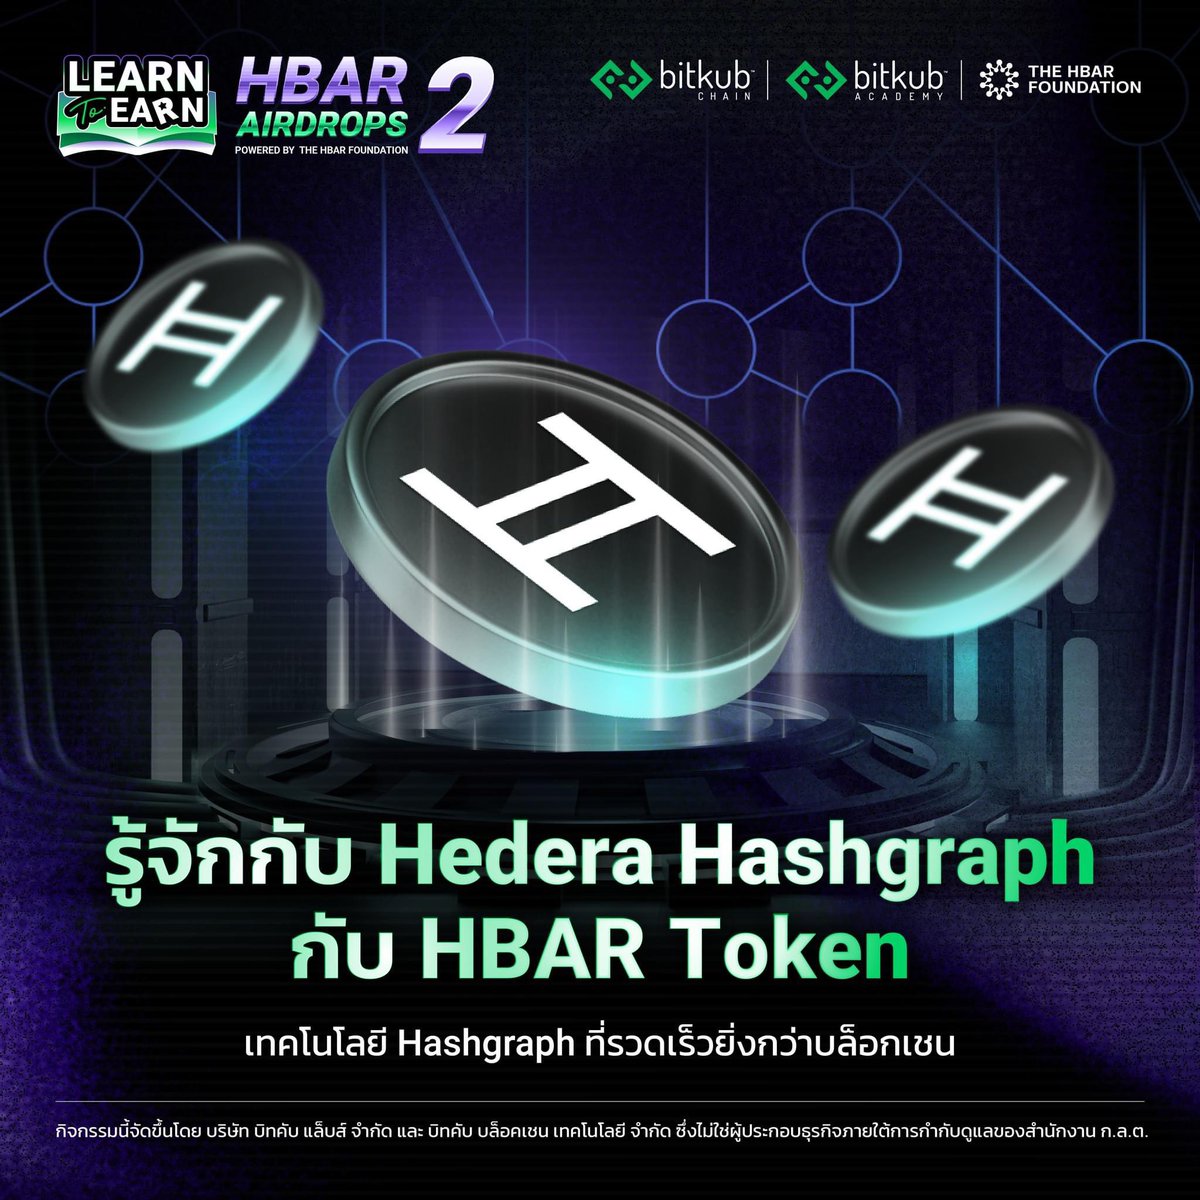 📌 What is Hedera Hashgraph (HBAR)?
🔎 Why is it faster than blockchain? 

Find the answers in the article below👇
bit.ly/3Ubaijh

#BitkubAcademy #BitkubNEXT #LearntoEarnHBARRound2 #HBAR #AnswerCorrectGetHBAR #BitkubChain